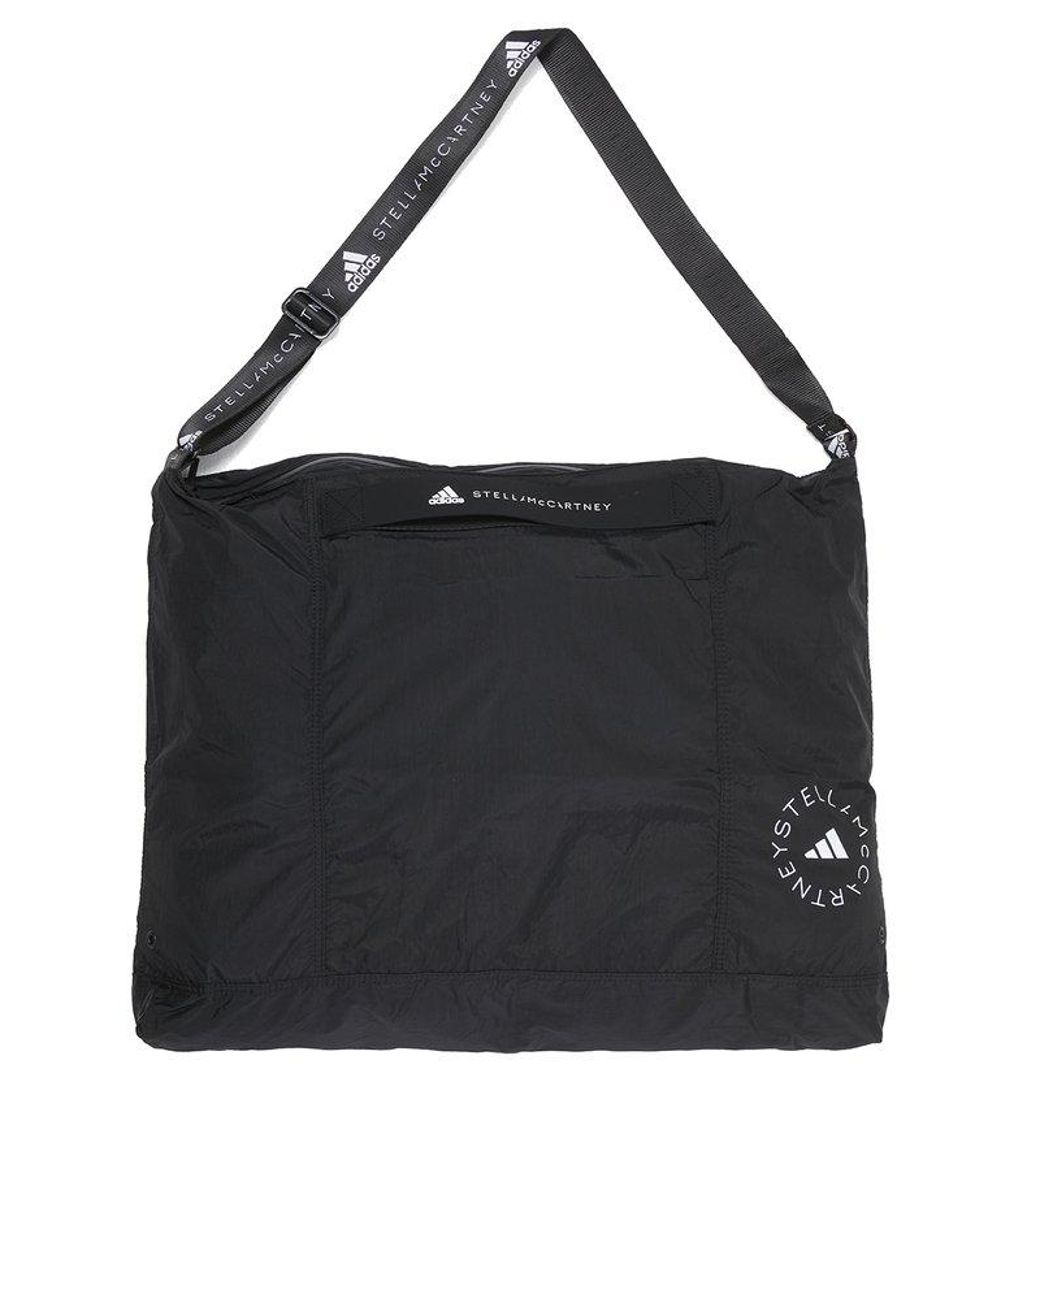 adidas By Stella McCartney Logo Printed Top Handle Bag in Black | Lyst